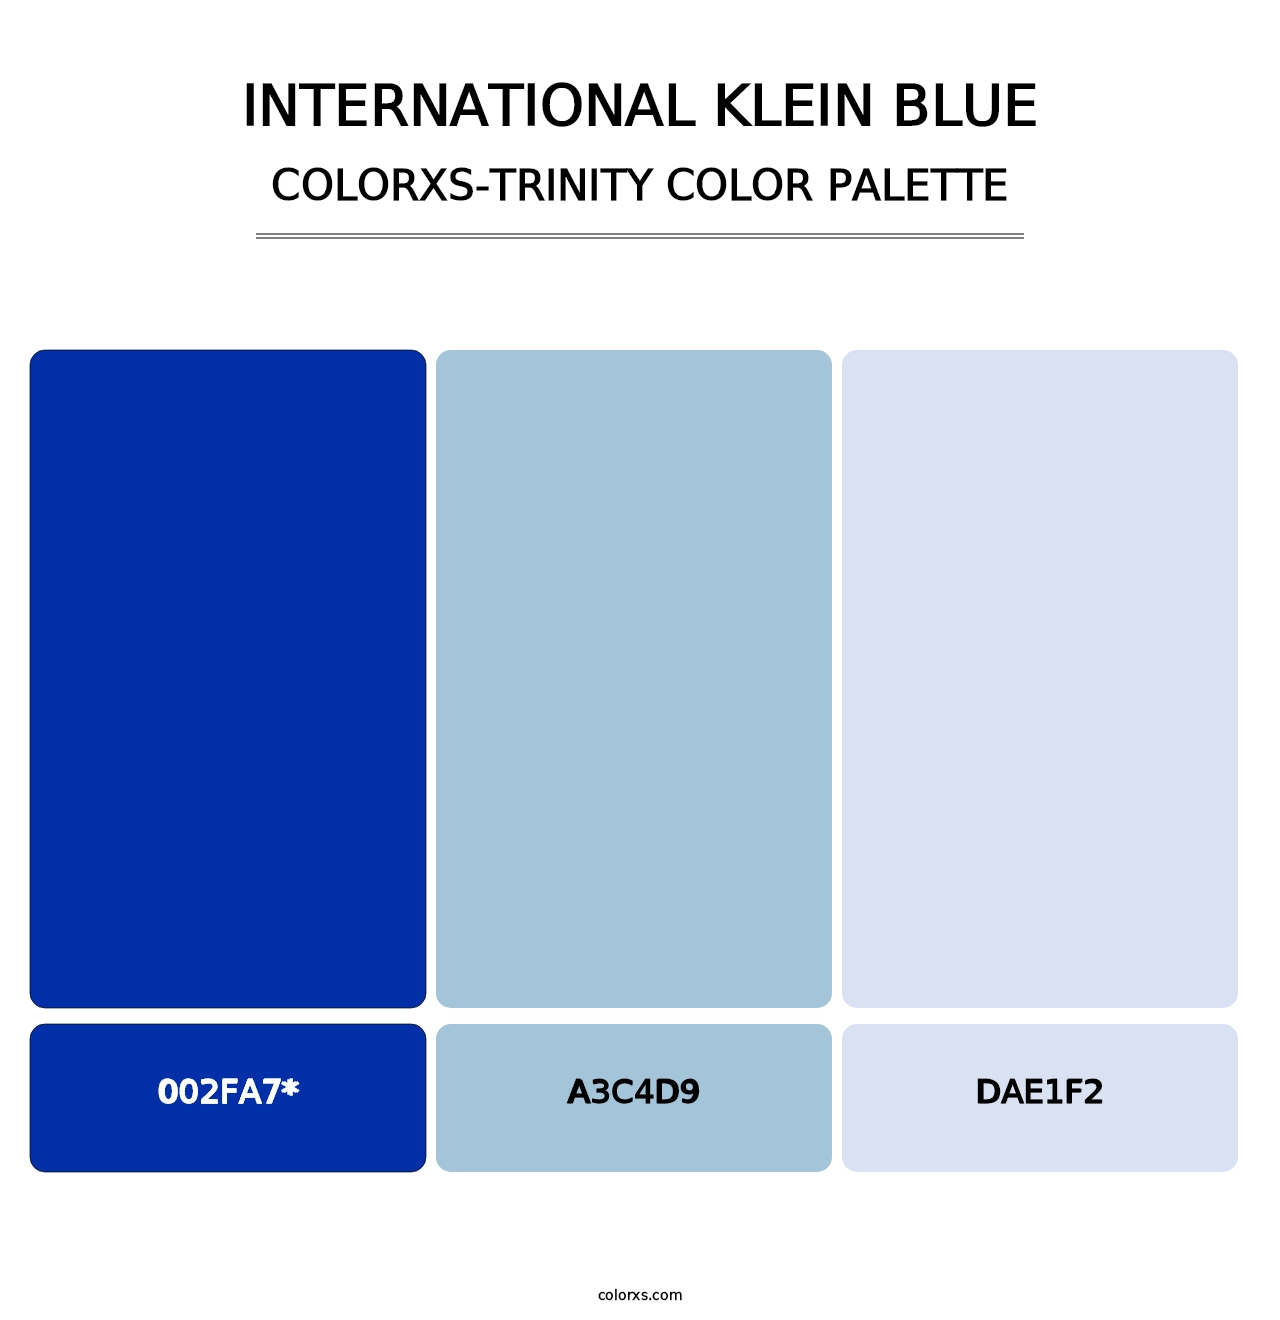 International Klein Blue - Colorxs Trinity Palette